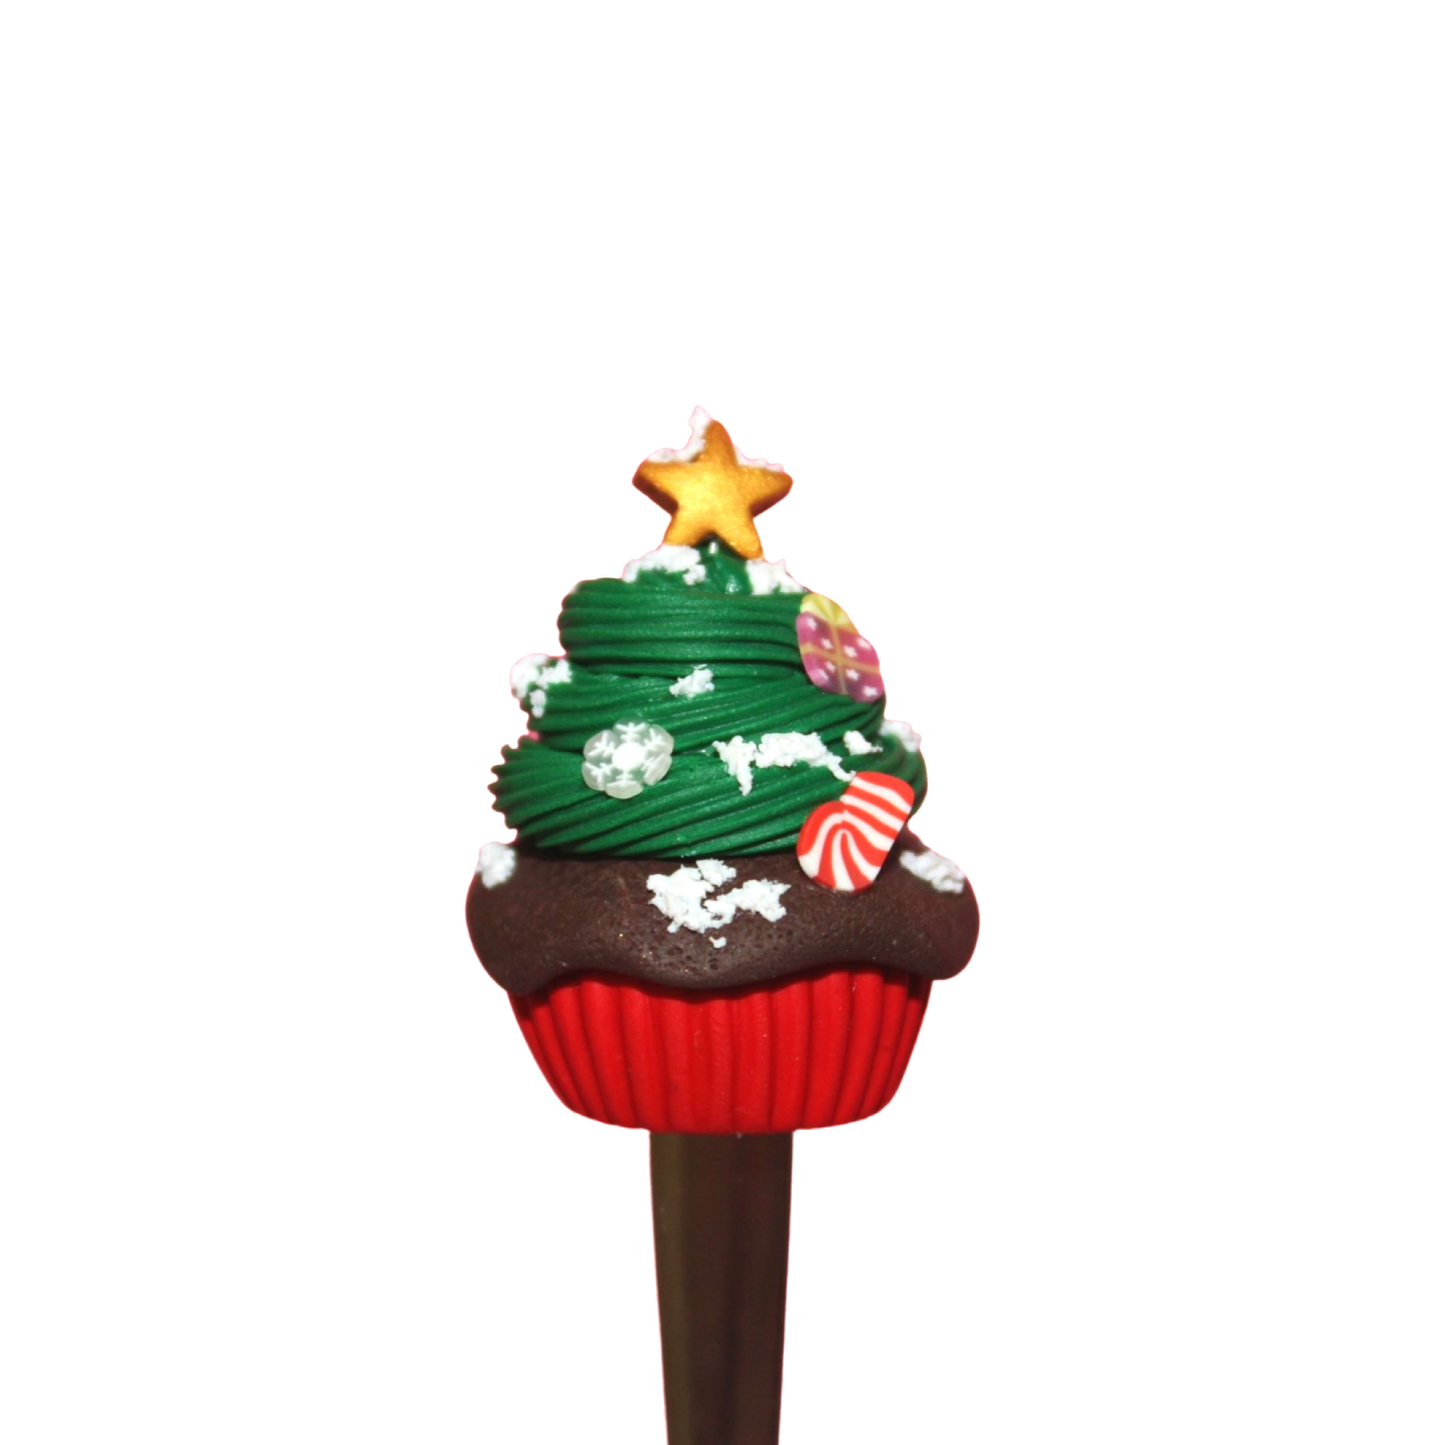 Petite Cuillère Personnalisée Cupcake Sapin de Noël